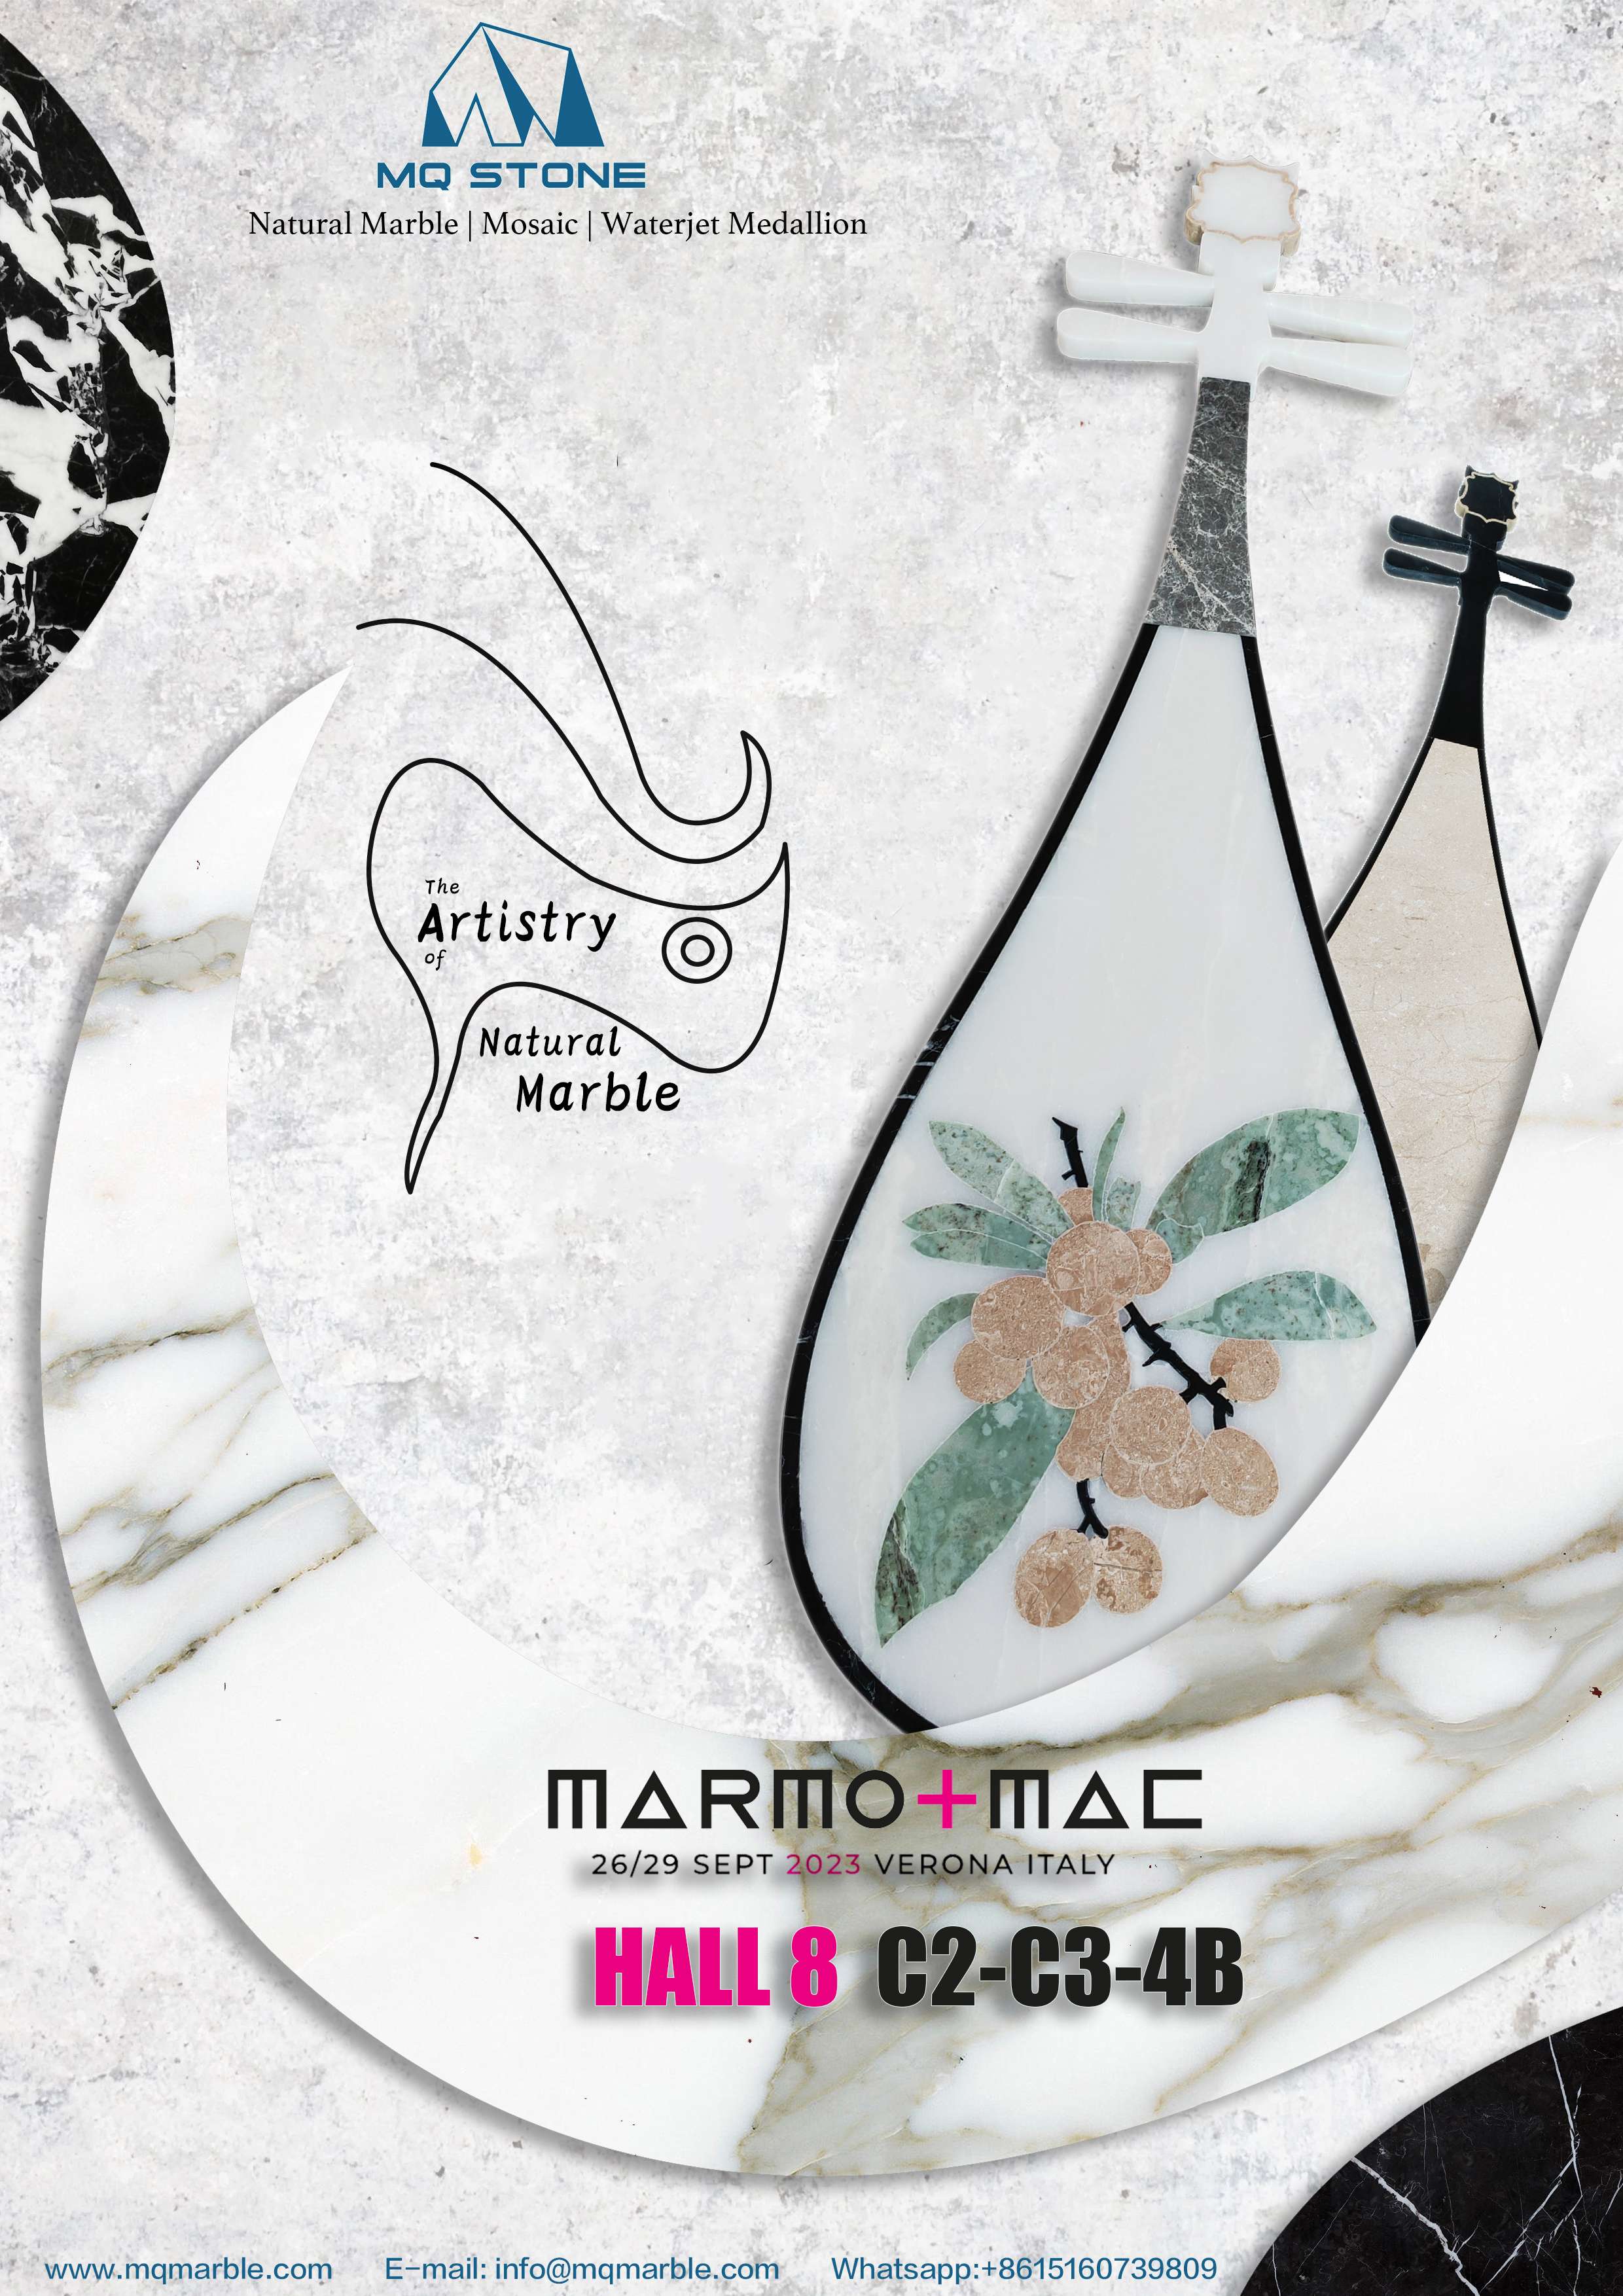 Marmo+MAC 2023 | MQ STONE